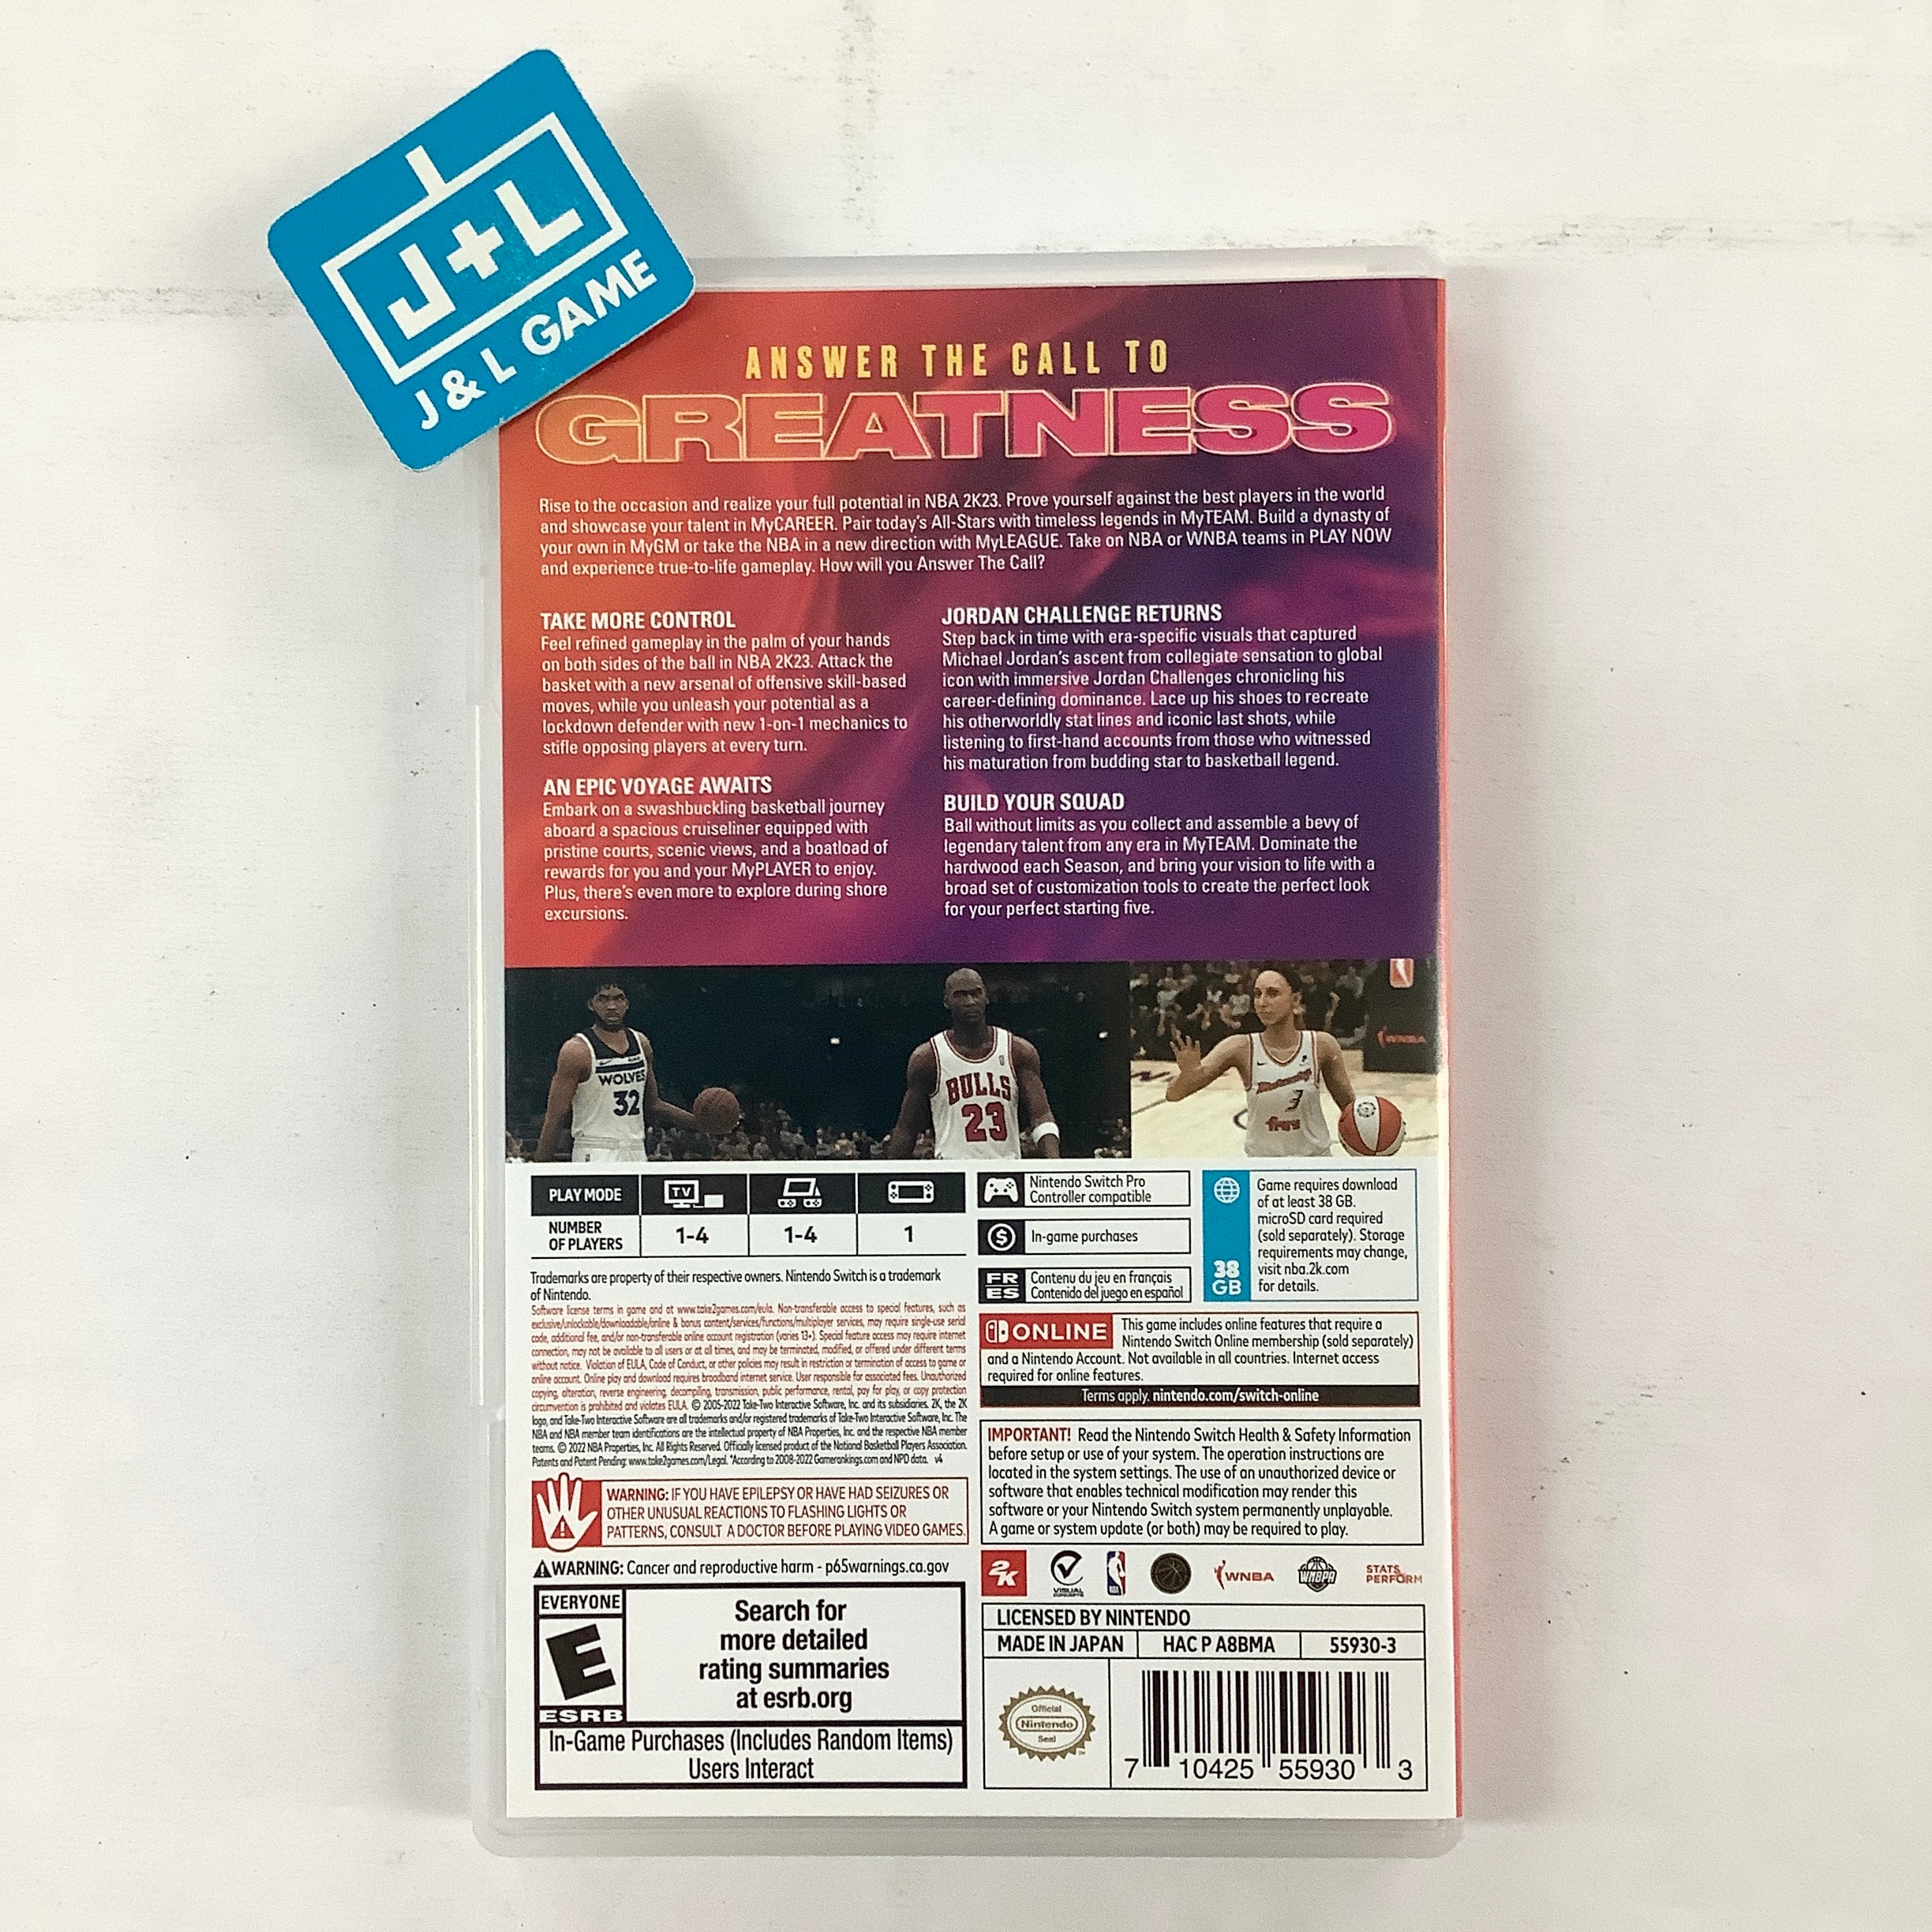 NBA 2K23 - (NSW) Nintendo Switch [UNBOXING] Video Games 2K   